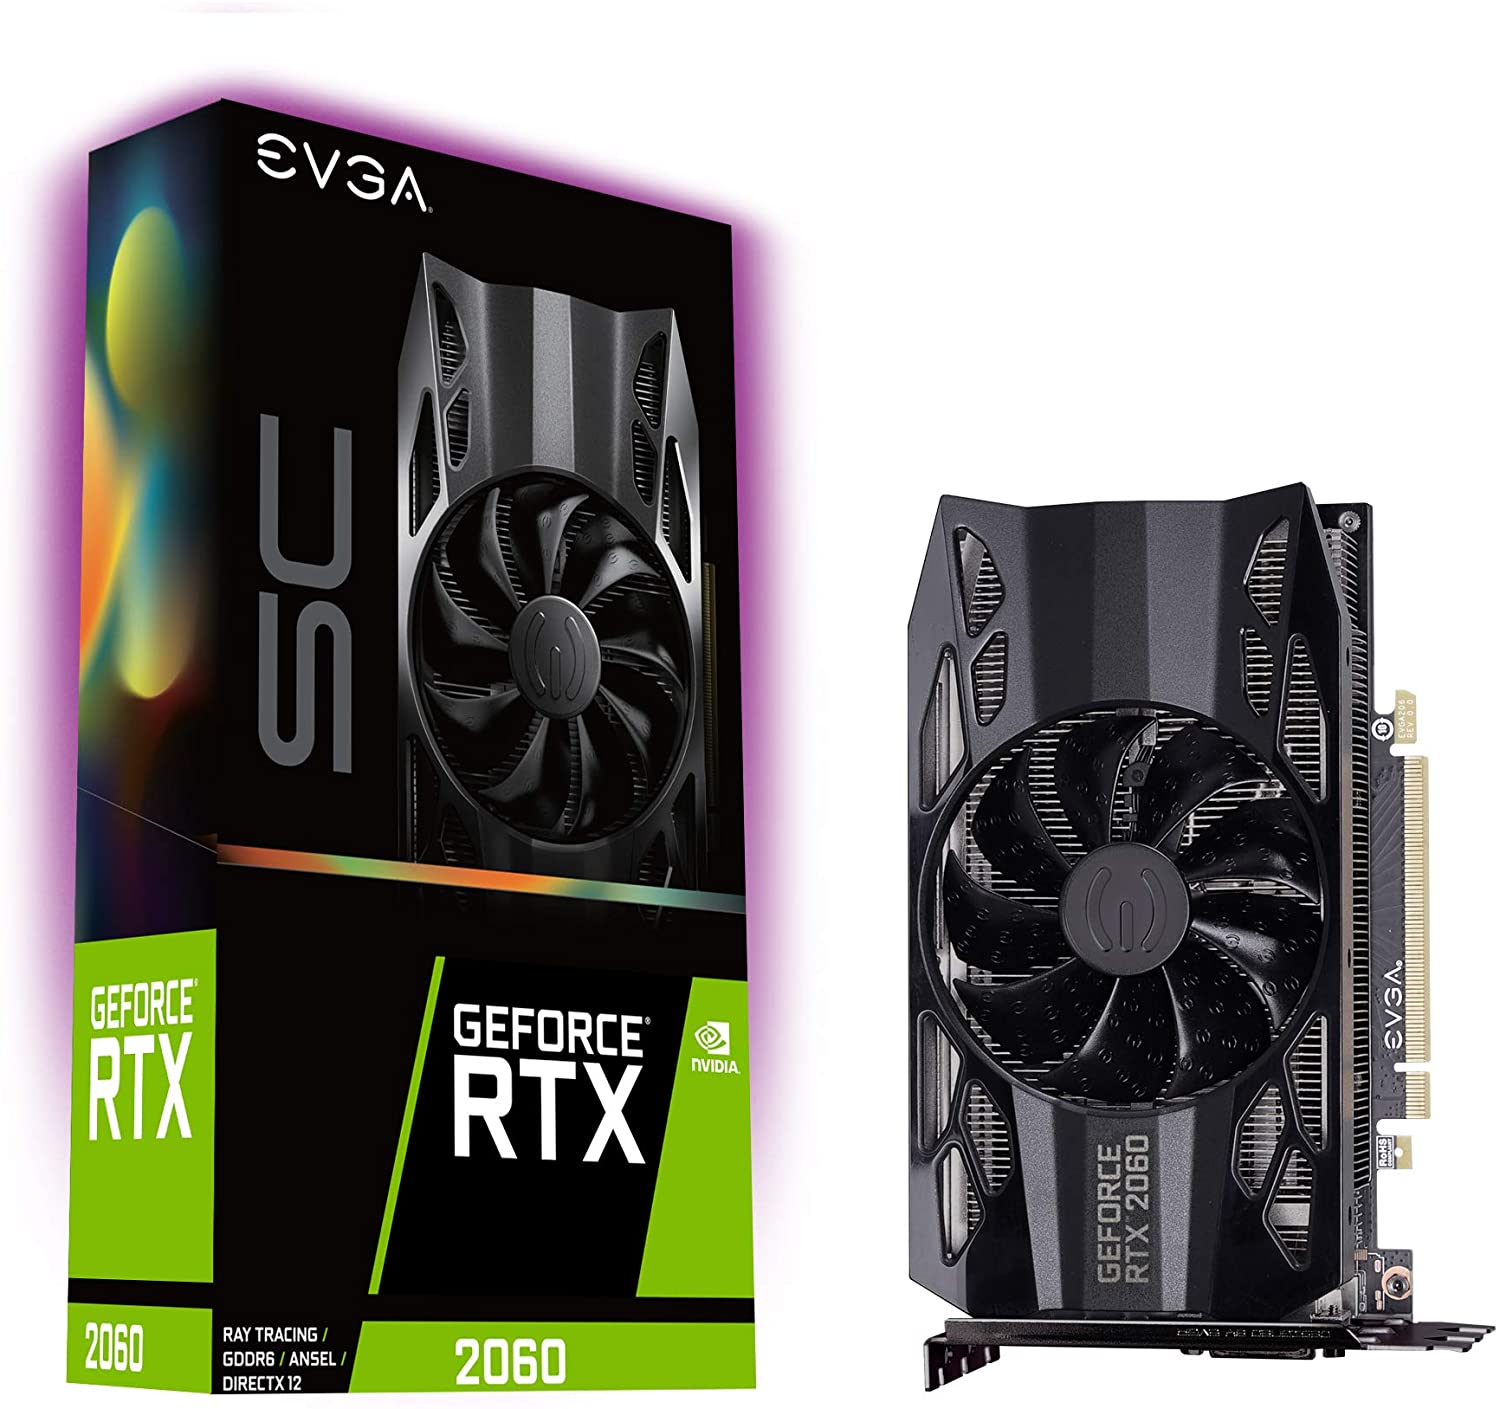 EVGA GeForce RTX 2060 SC GAMING, 6GB GDDR6, HDB Fan Graphics Card 06G-P4-2062-KR $250